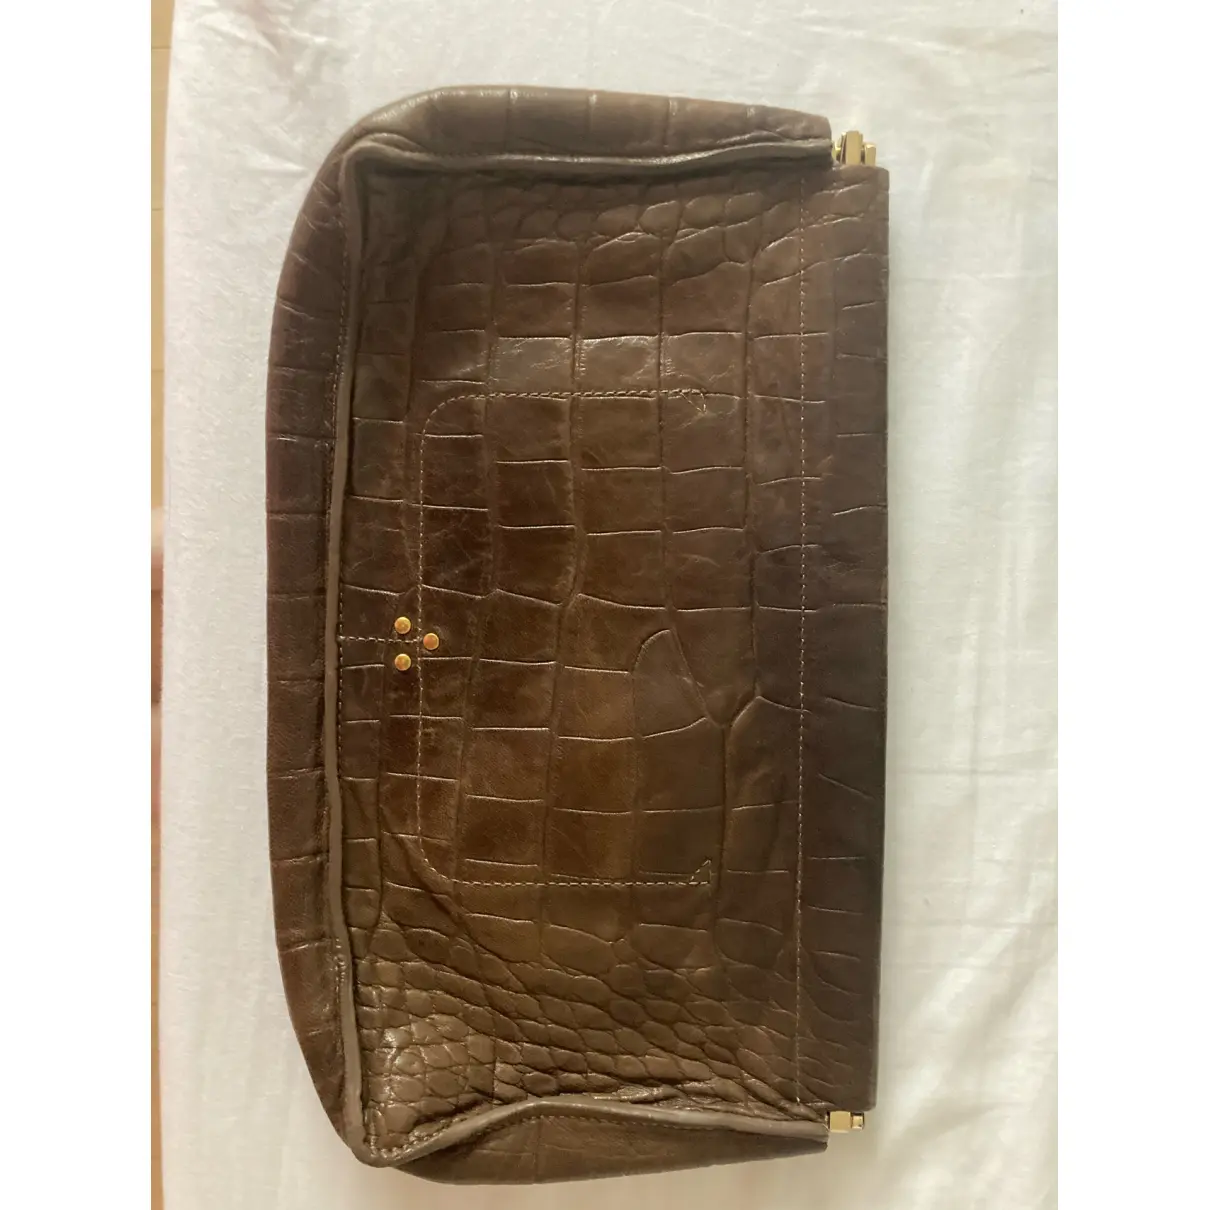 Buy Jerome Dreyfuss Leather clutch bag online